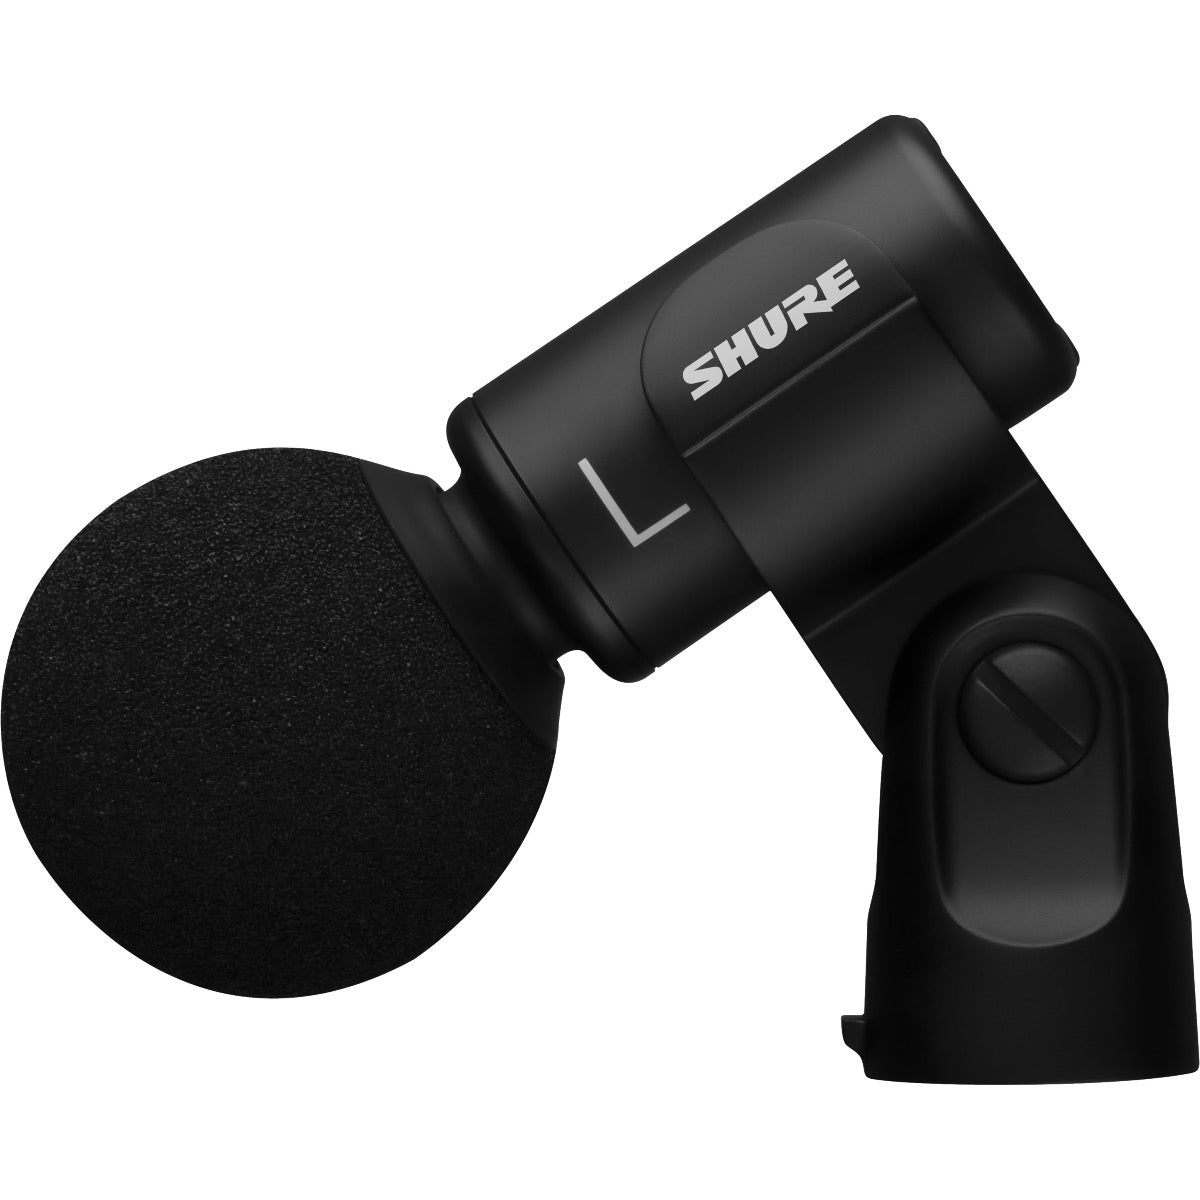 Shure MV88+ Stereo USB Condenser Microphone View 14